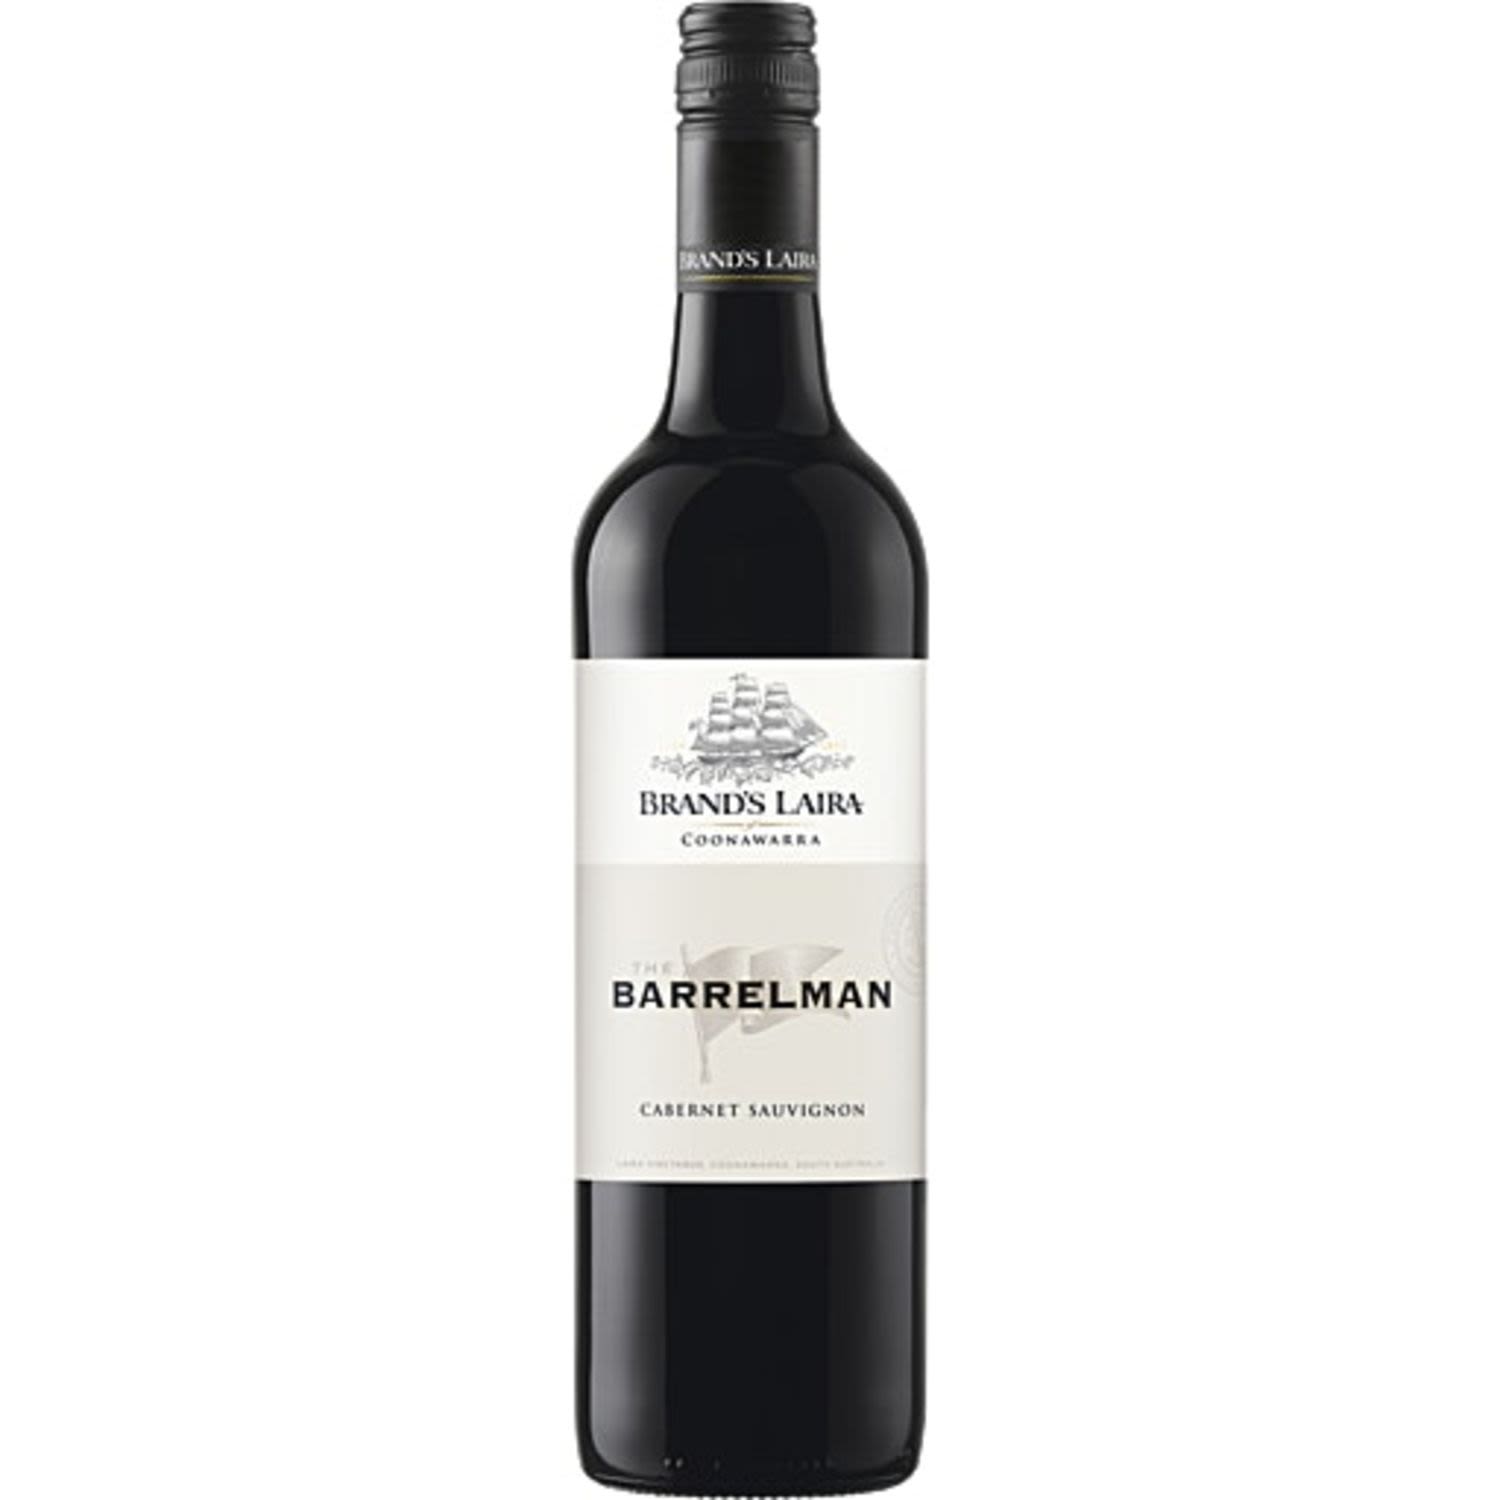 Brand's Laira Barrelman Cabernet Sauvignon 750mL Bottle